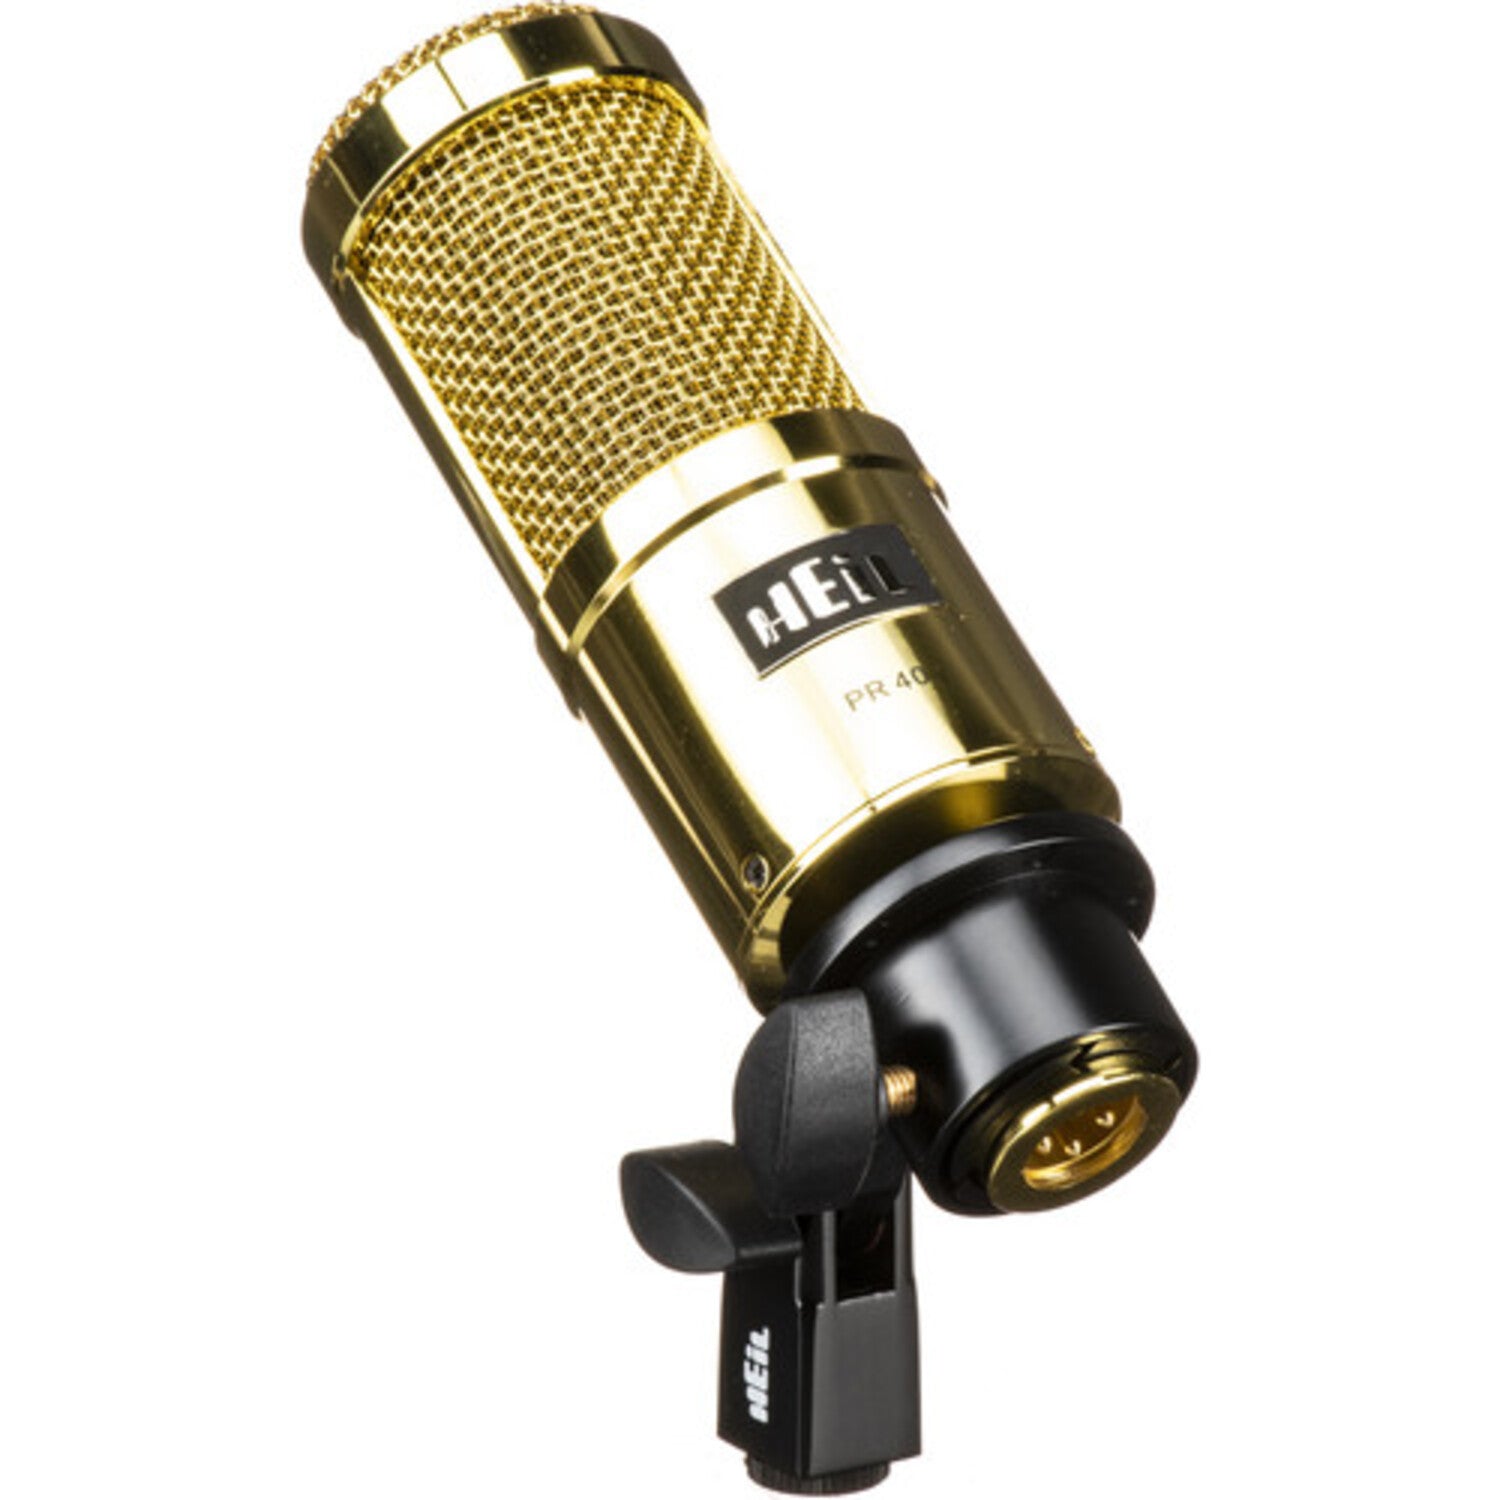 Heil PR-40 Dynamic Studio Recording Microphone by HeiL 